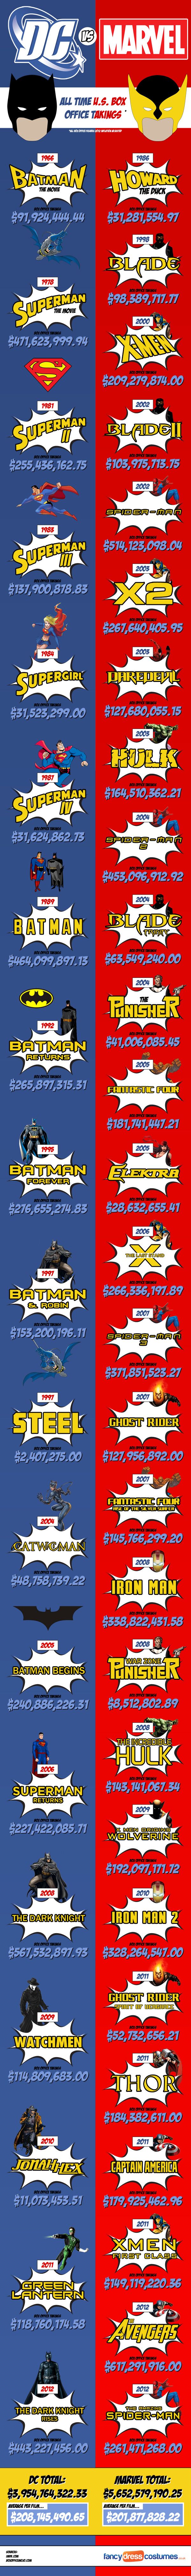 Pendapatan Box Office Antara Marvel vs DC (Infographic)